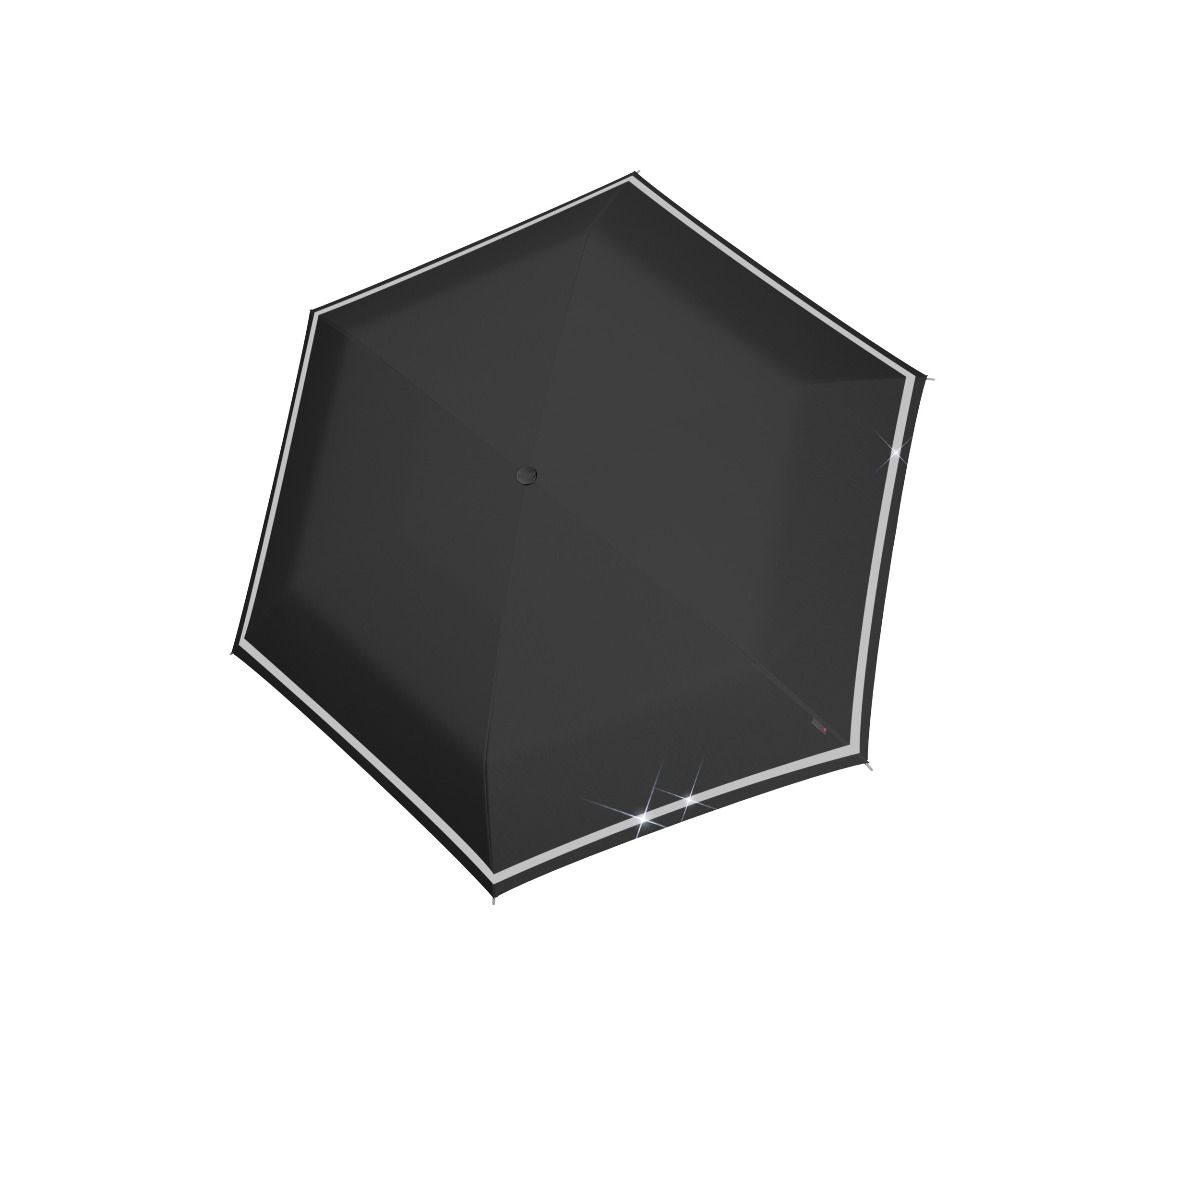 Knirps Rookie Manual Black Reflective Regenschirm